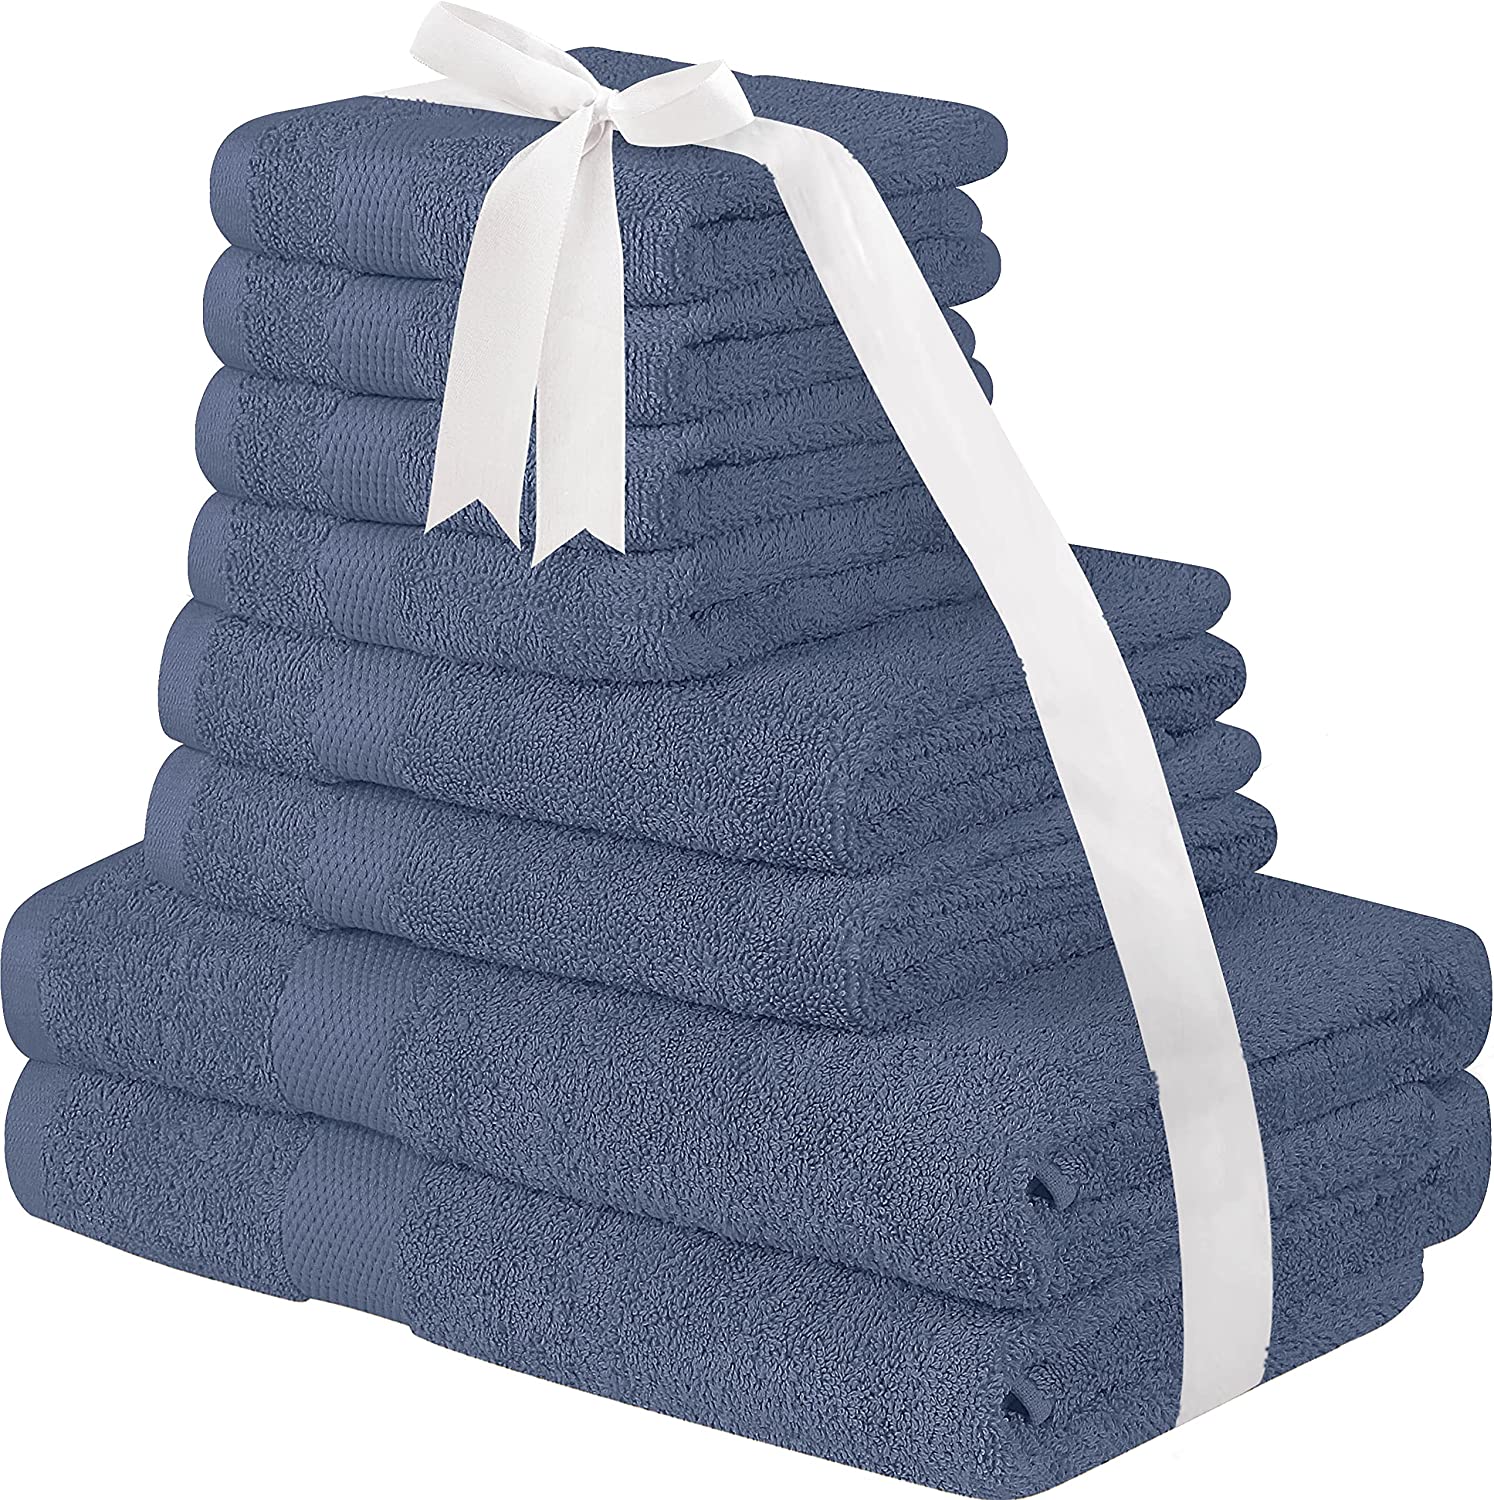 100% Egyptian Cotton 8 Towels Set 700gsm- 2 Bath, 2 Hand, 4 Face Towels